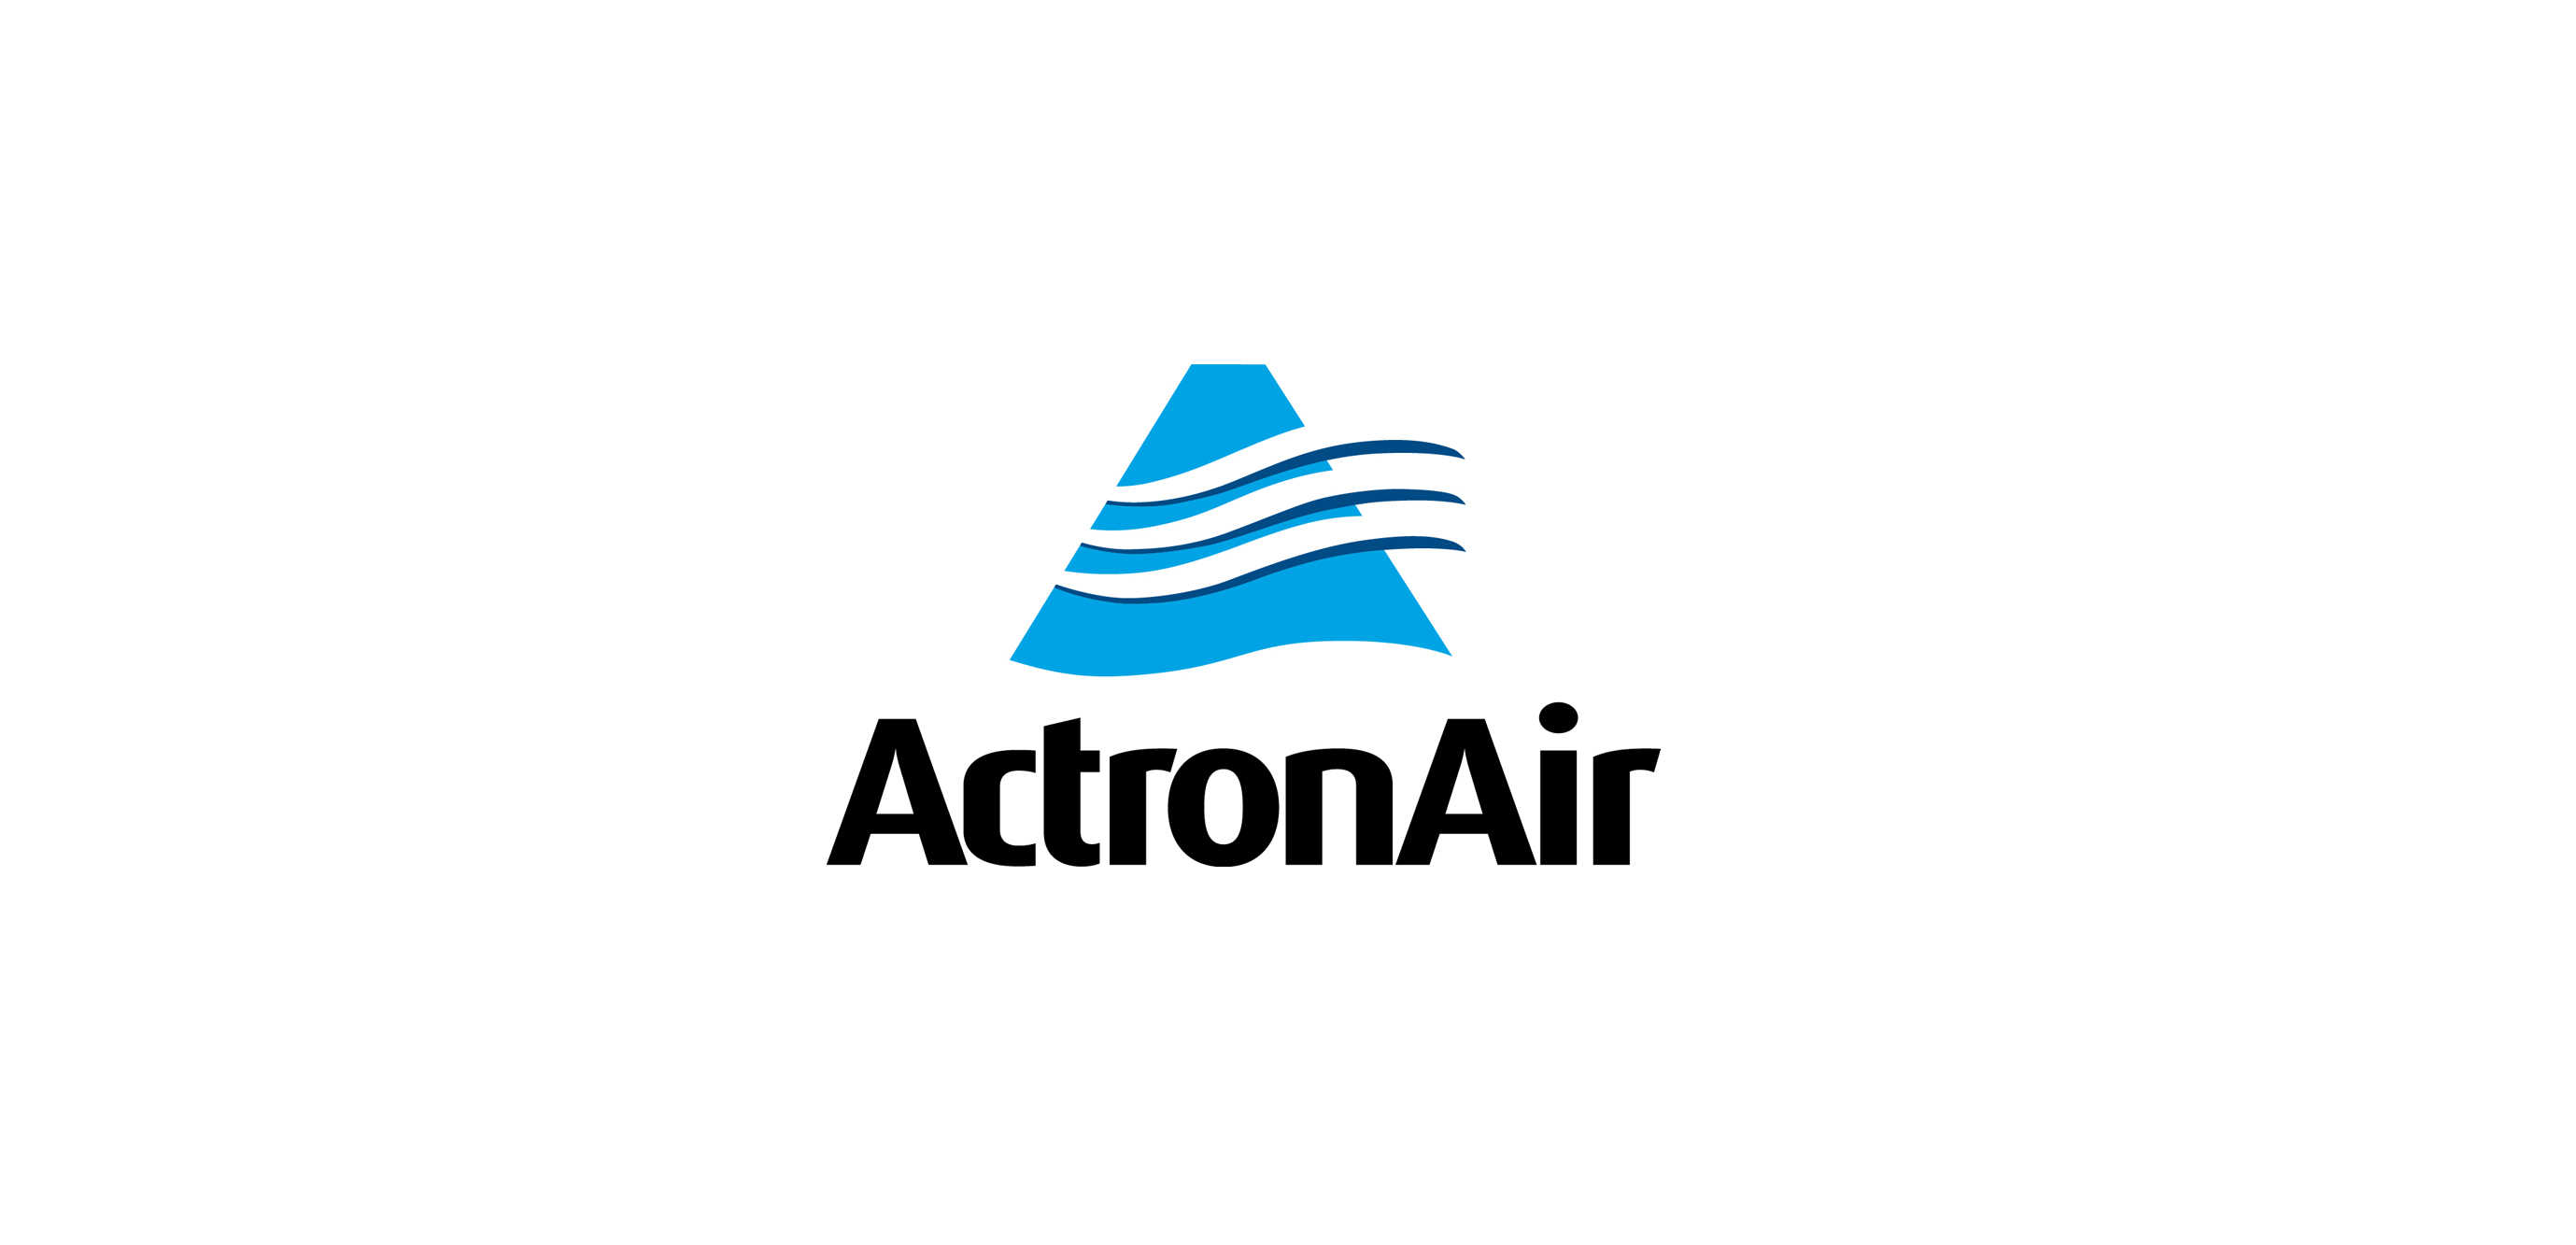 Actron Air Vector PNG - 105197